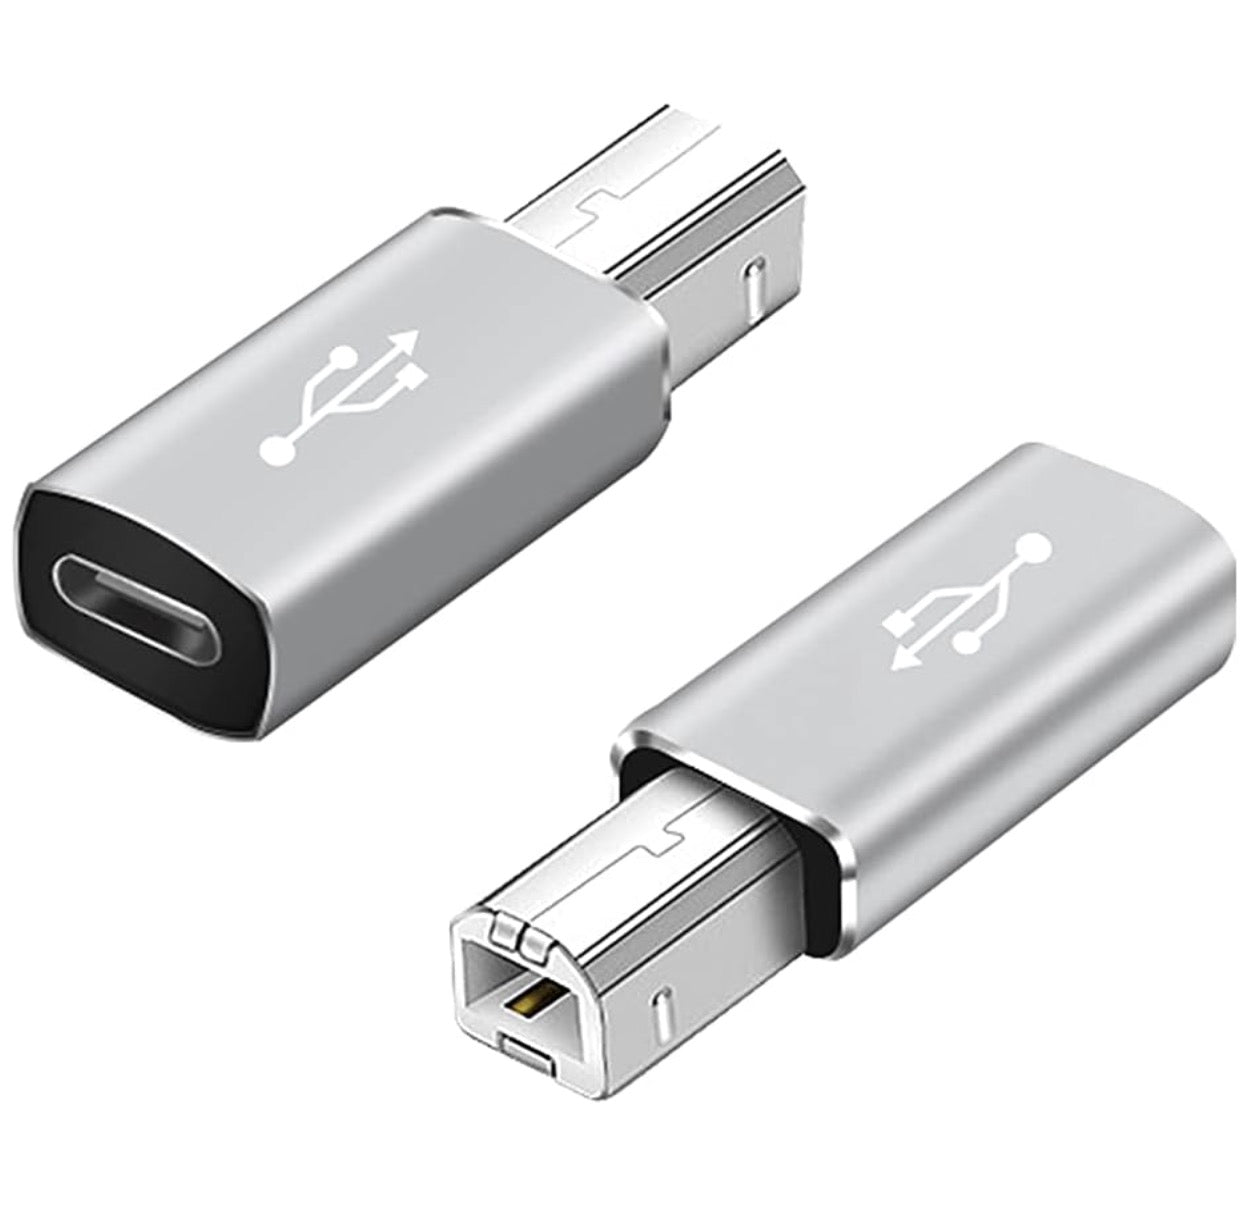 USB C to USB 2.0 B MIDI Adapter Printer Connector for Printers,Midi Keyboard,Electronic Music Instrument